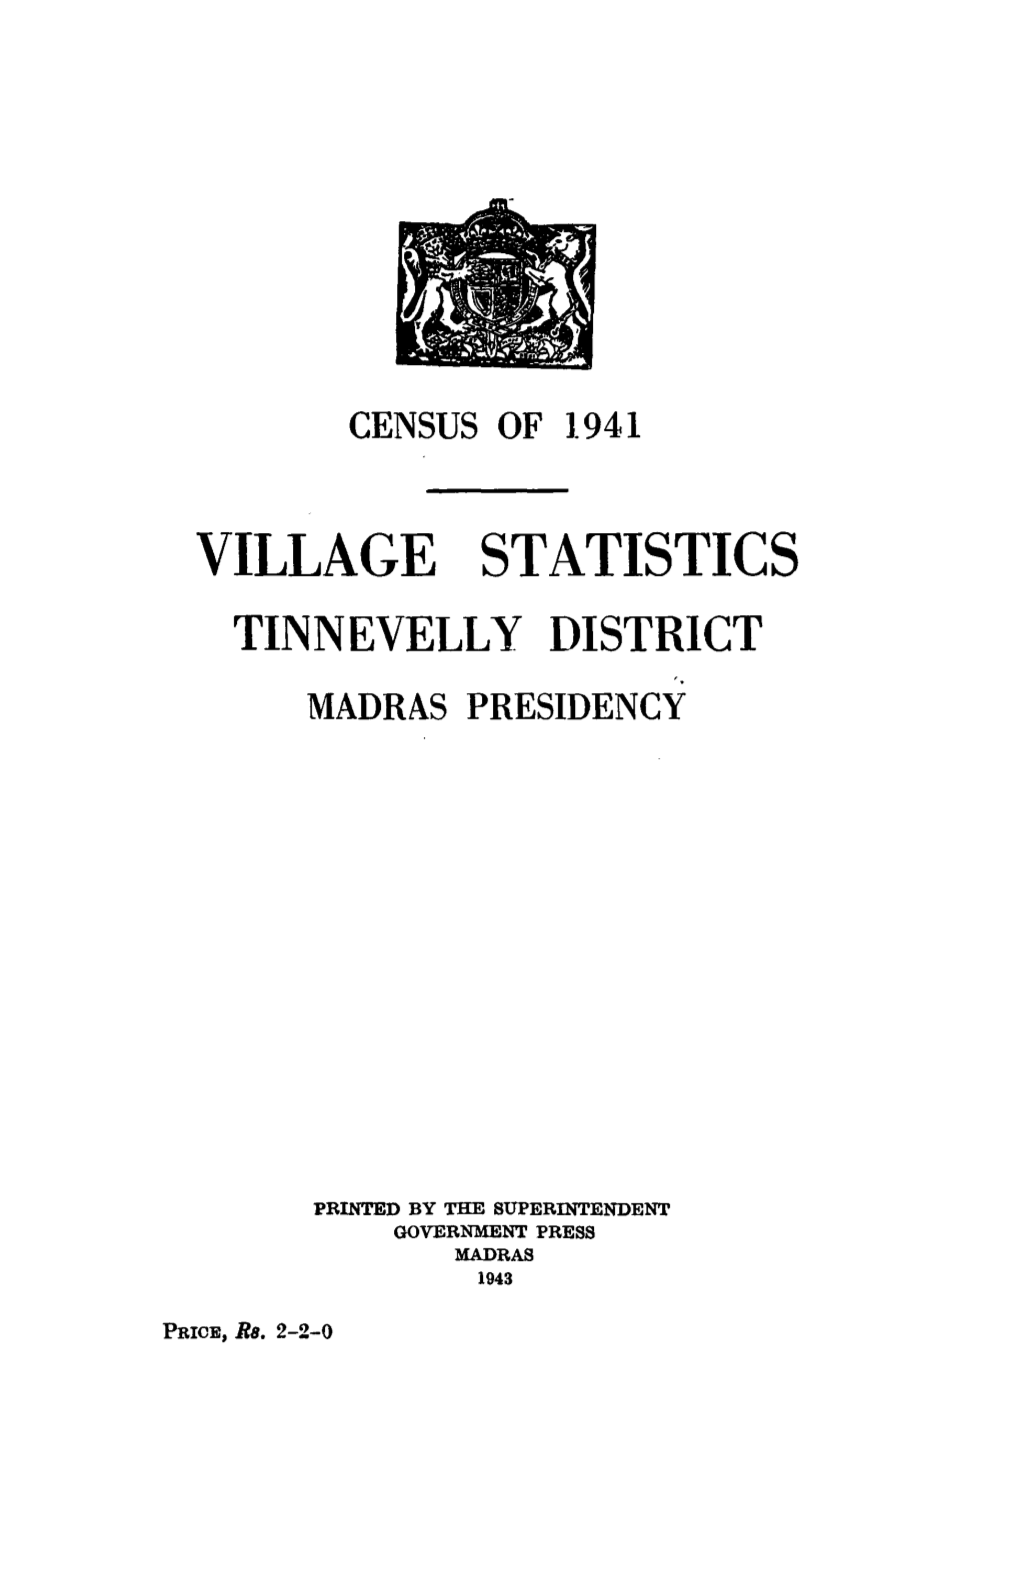 Village Statistics Tinnevell Y District Madras Presidency